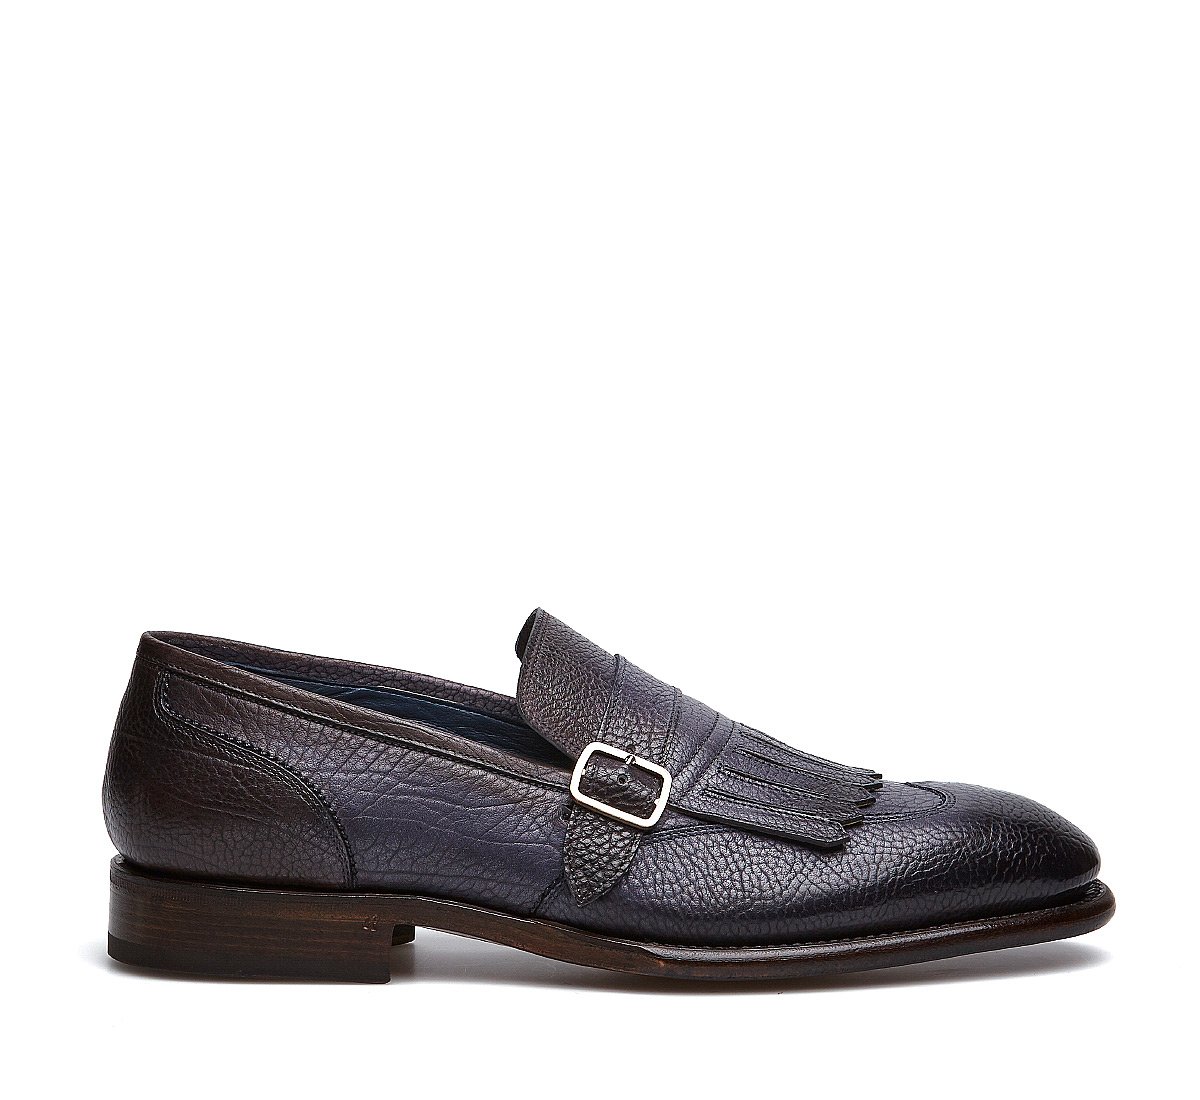 Fabi Flex Goodyear monk-strap shoes in exquisite hand-aged calfskin